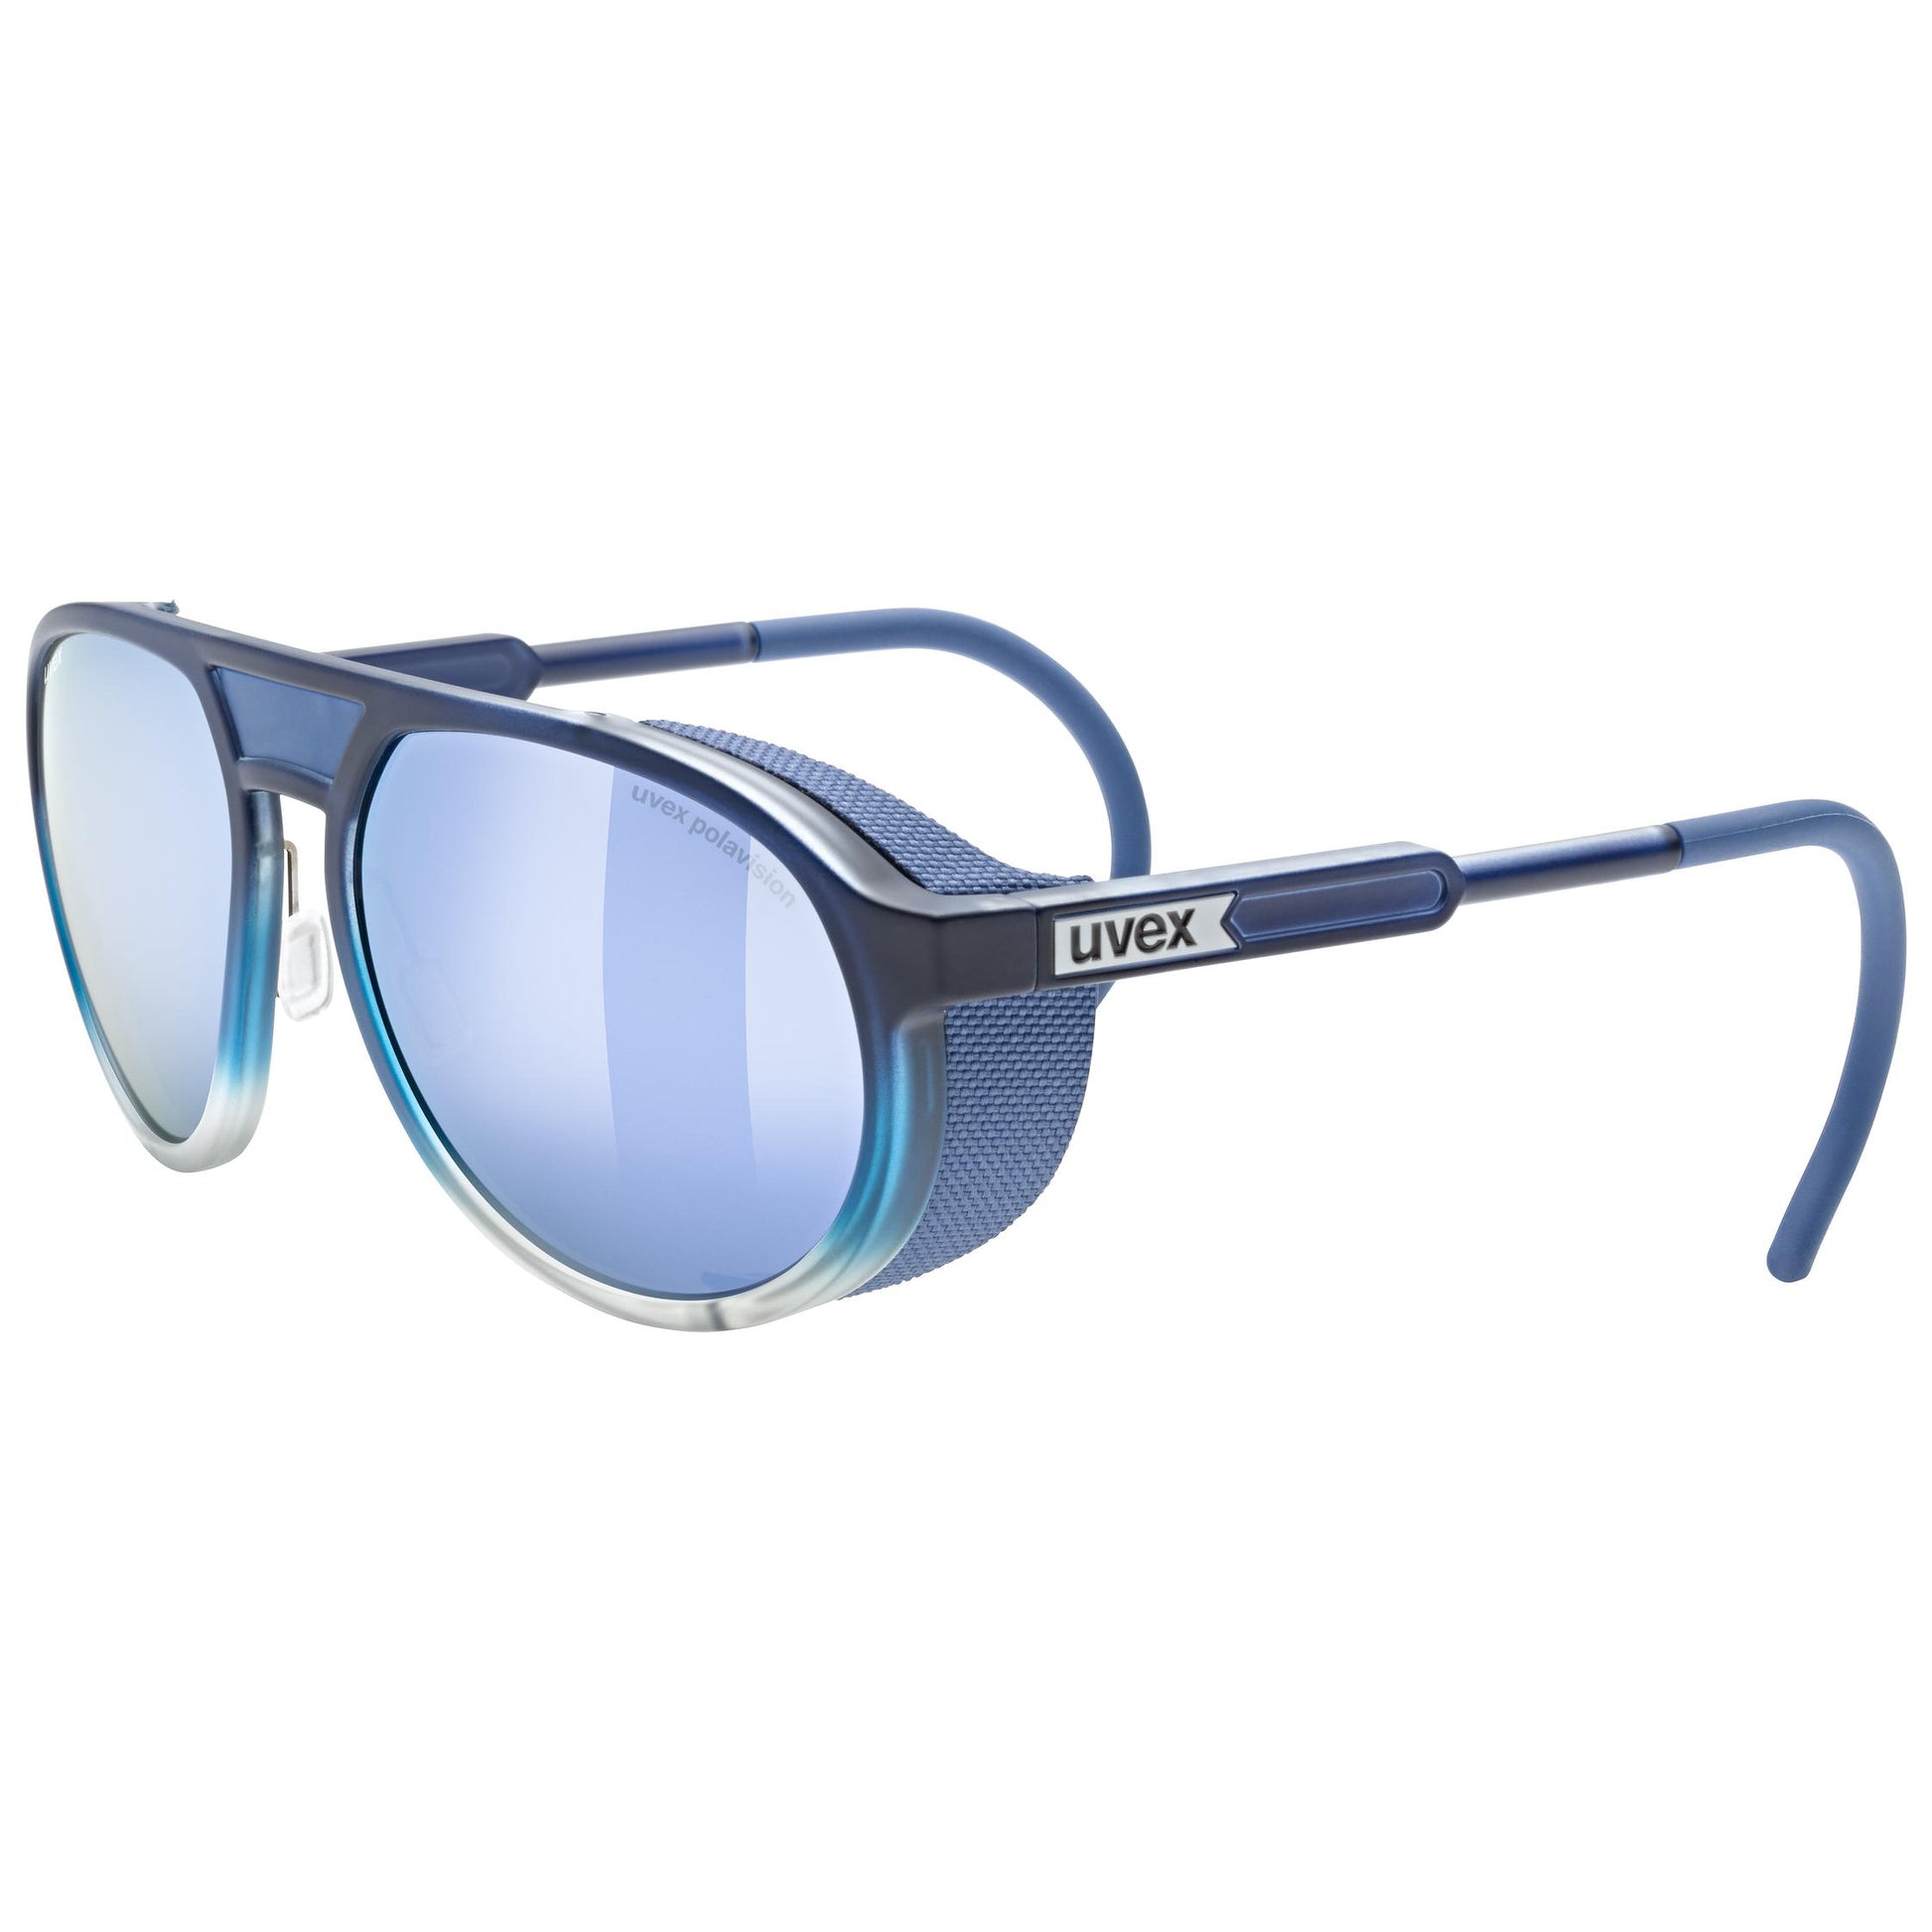 Uvex Mtn Classic P Sunglasses - Glacier Glasses with Polarized Lens Blue matte/mirror Blue (Cat. 3)